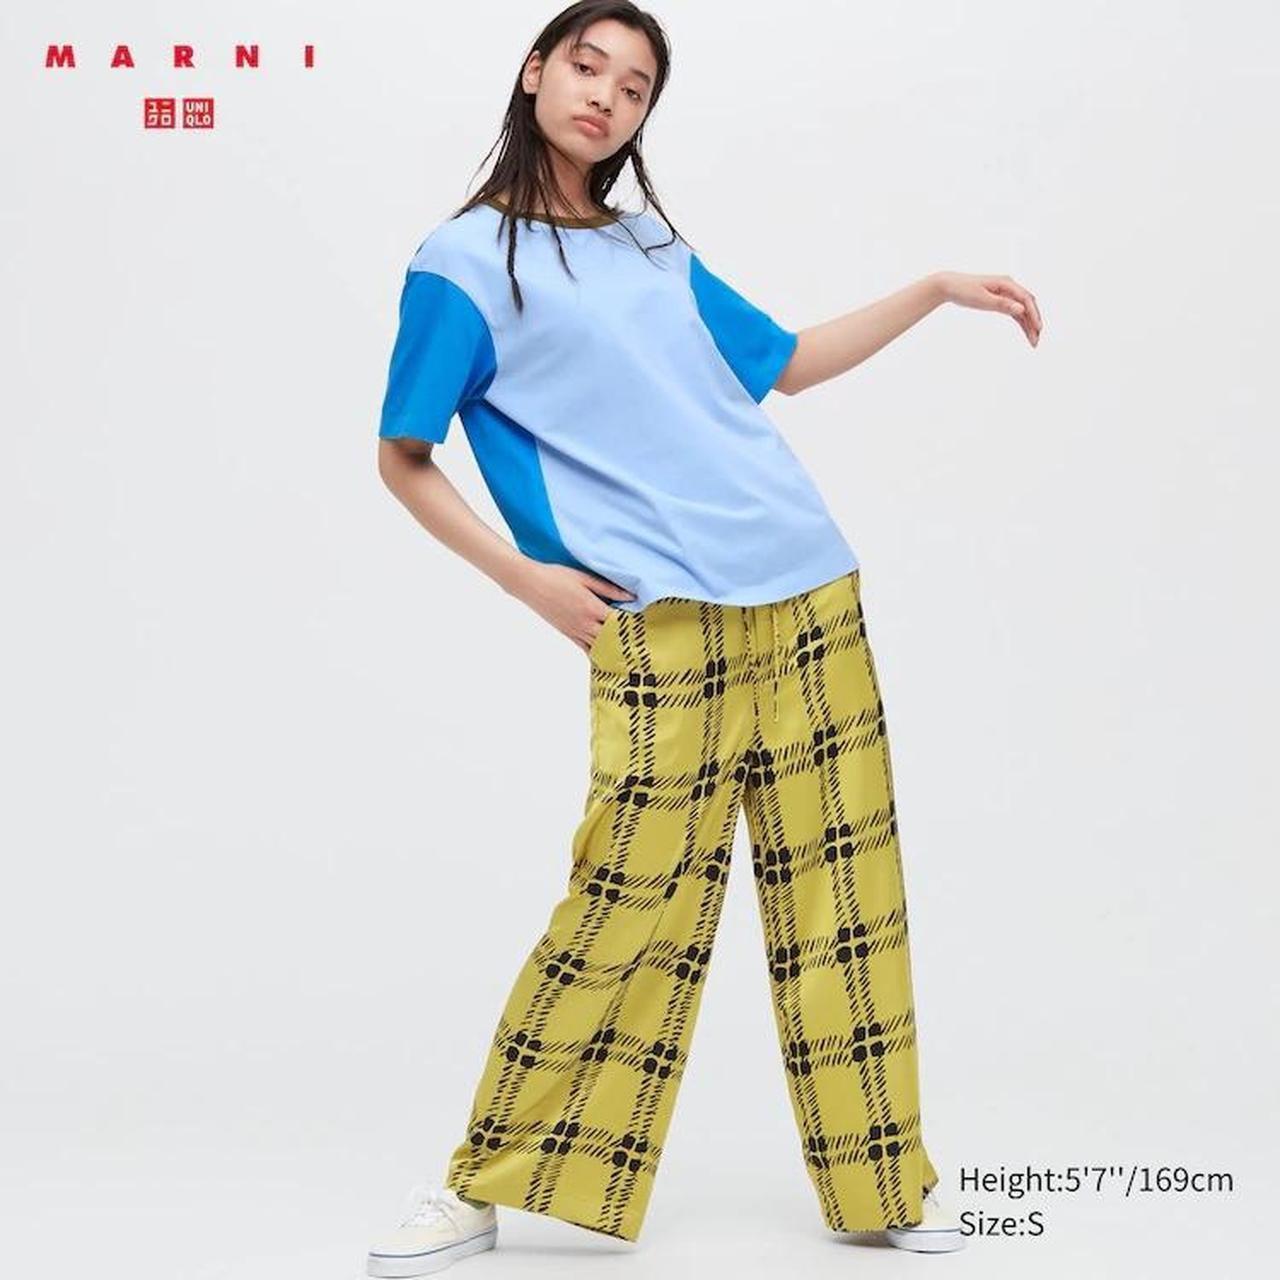 Marni Women's Yellow and Black Trousers